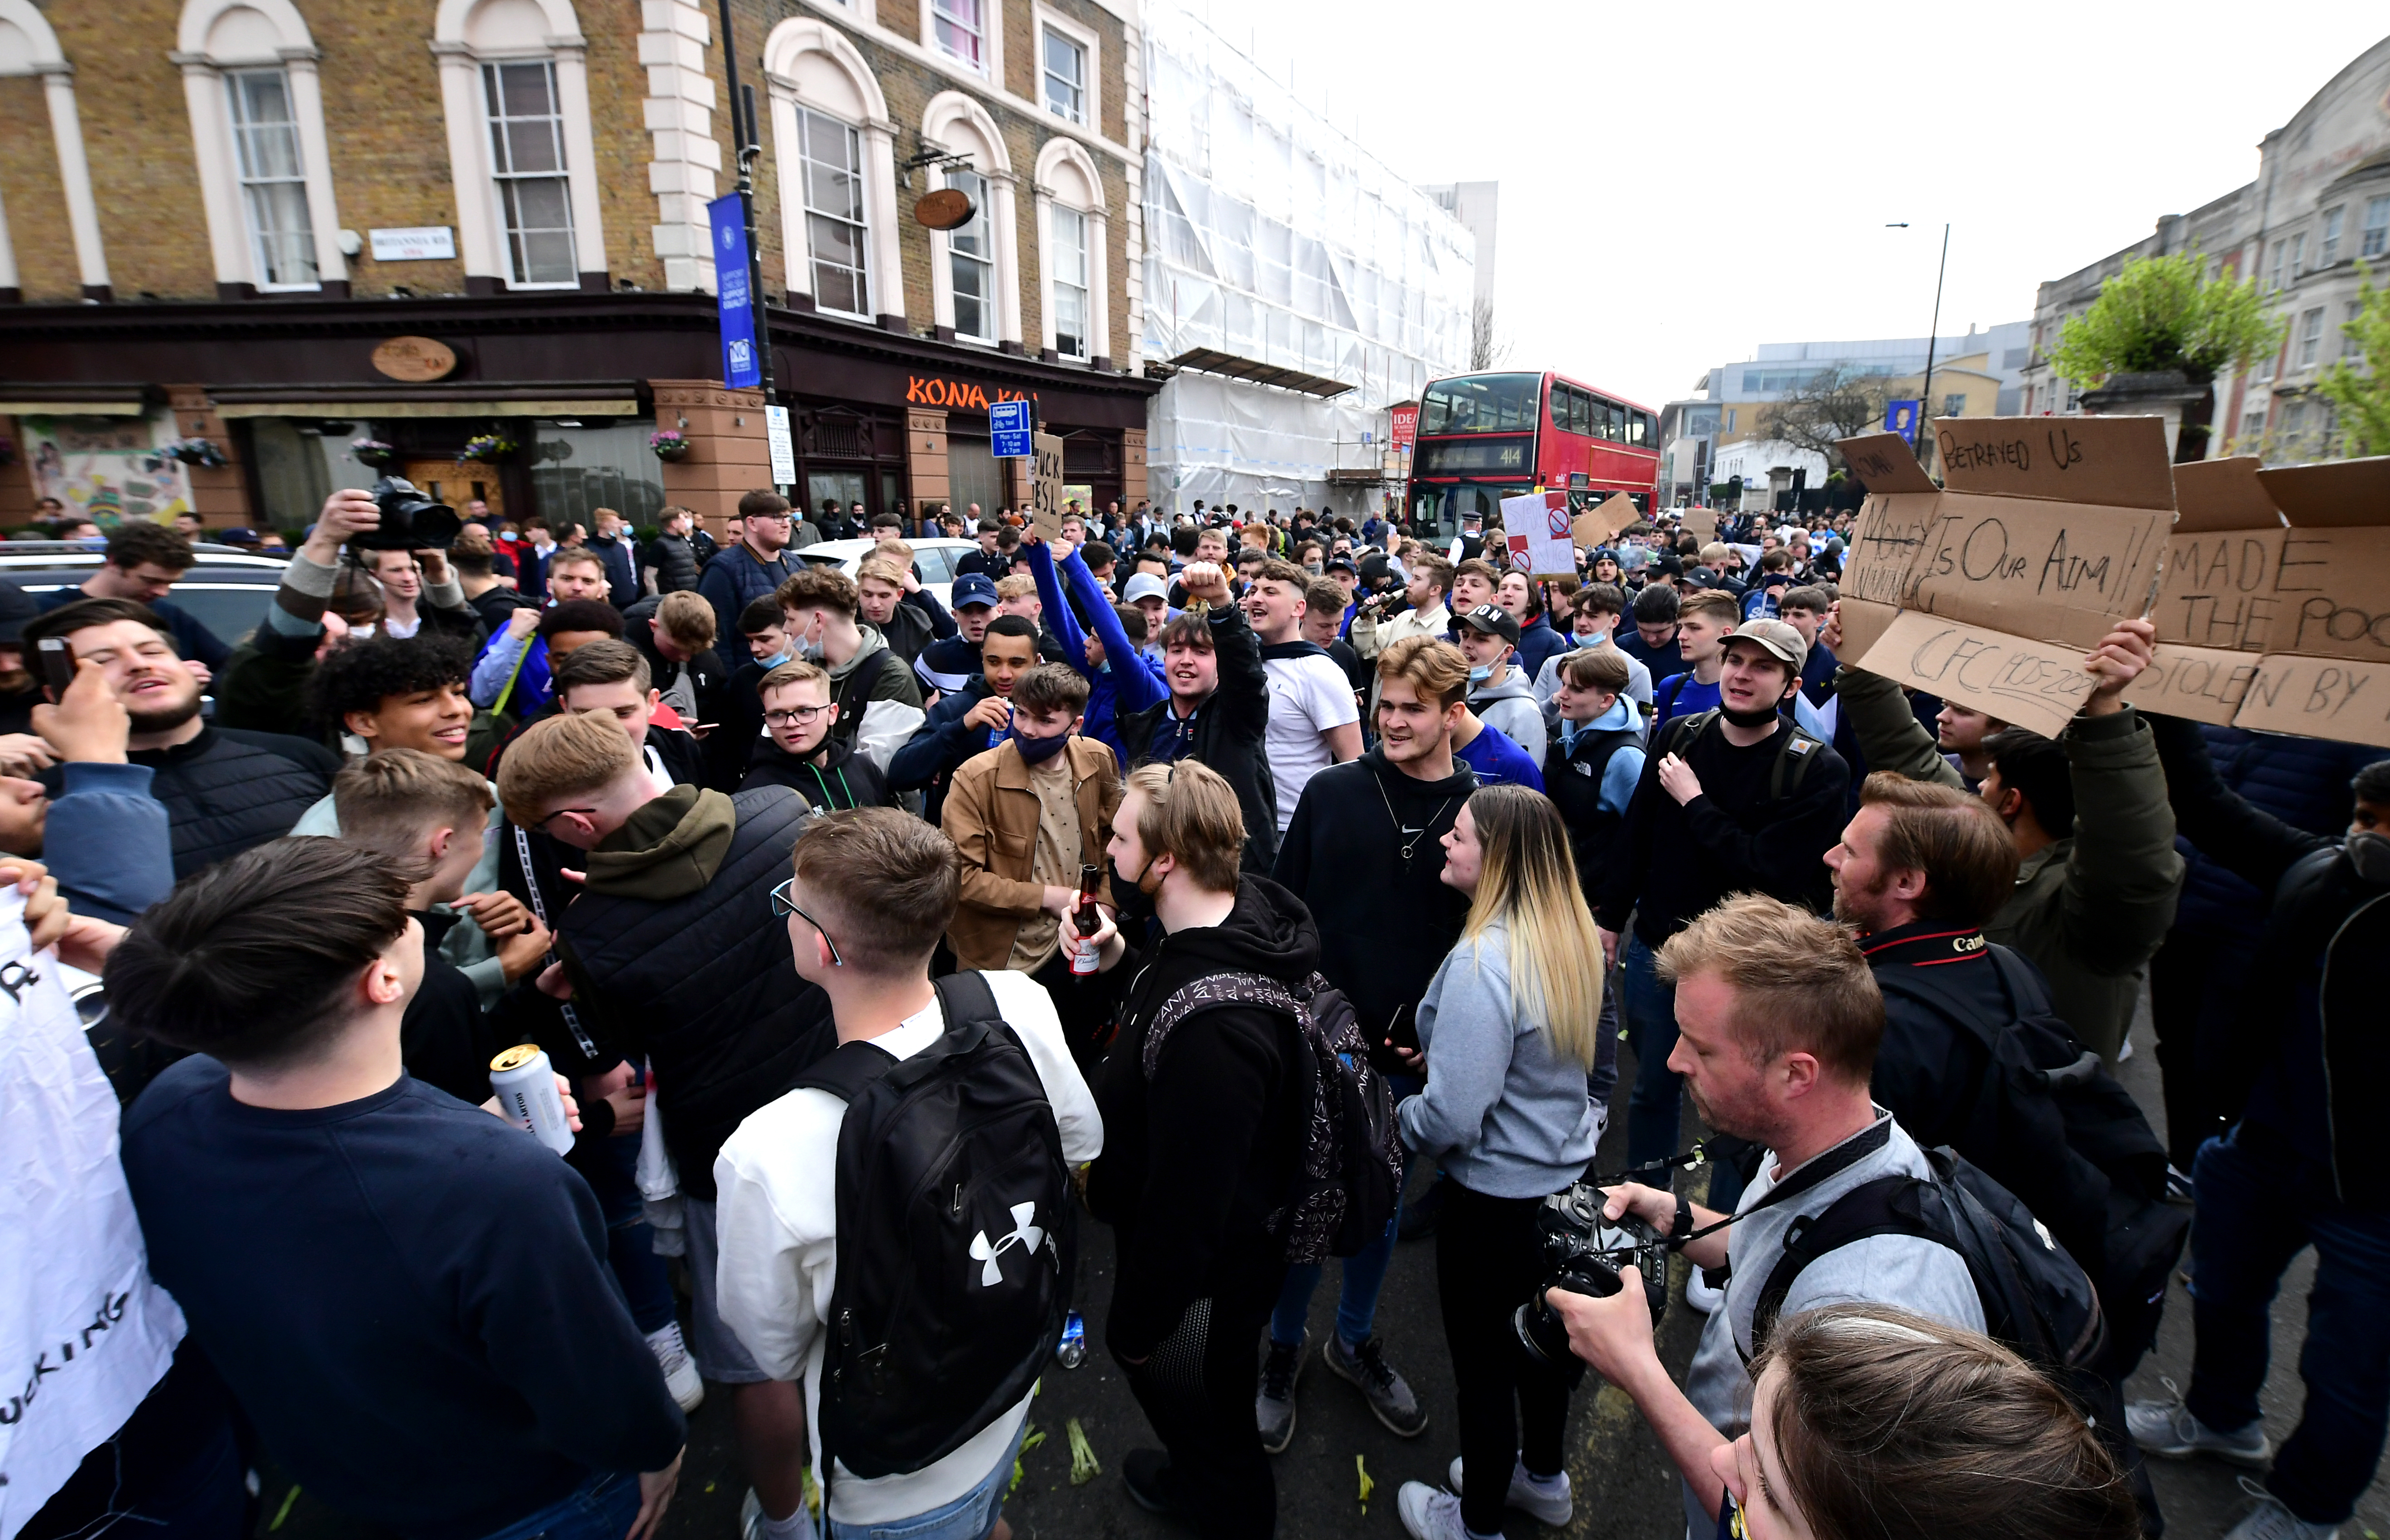 Chelsea fans protesting against the original Super League in 2021 outside Stamford Bridge